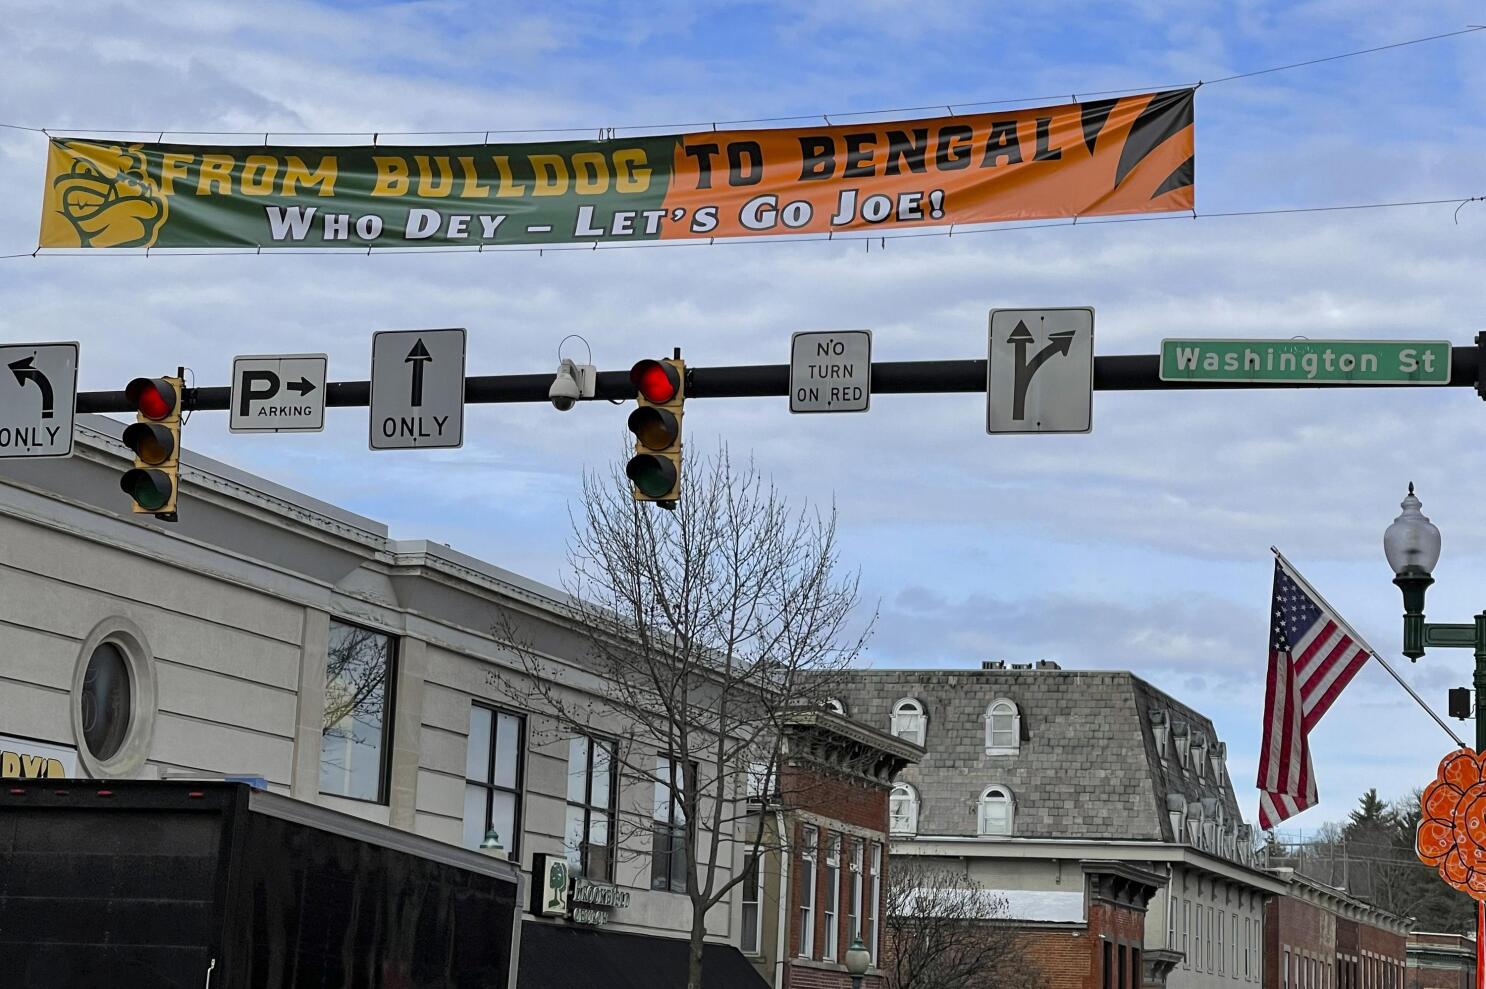 Tiny Ohio town bursting with pride over local hero Burrow